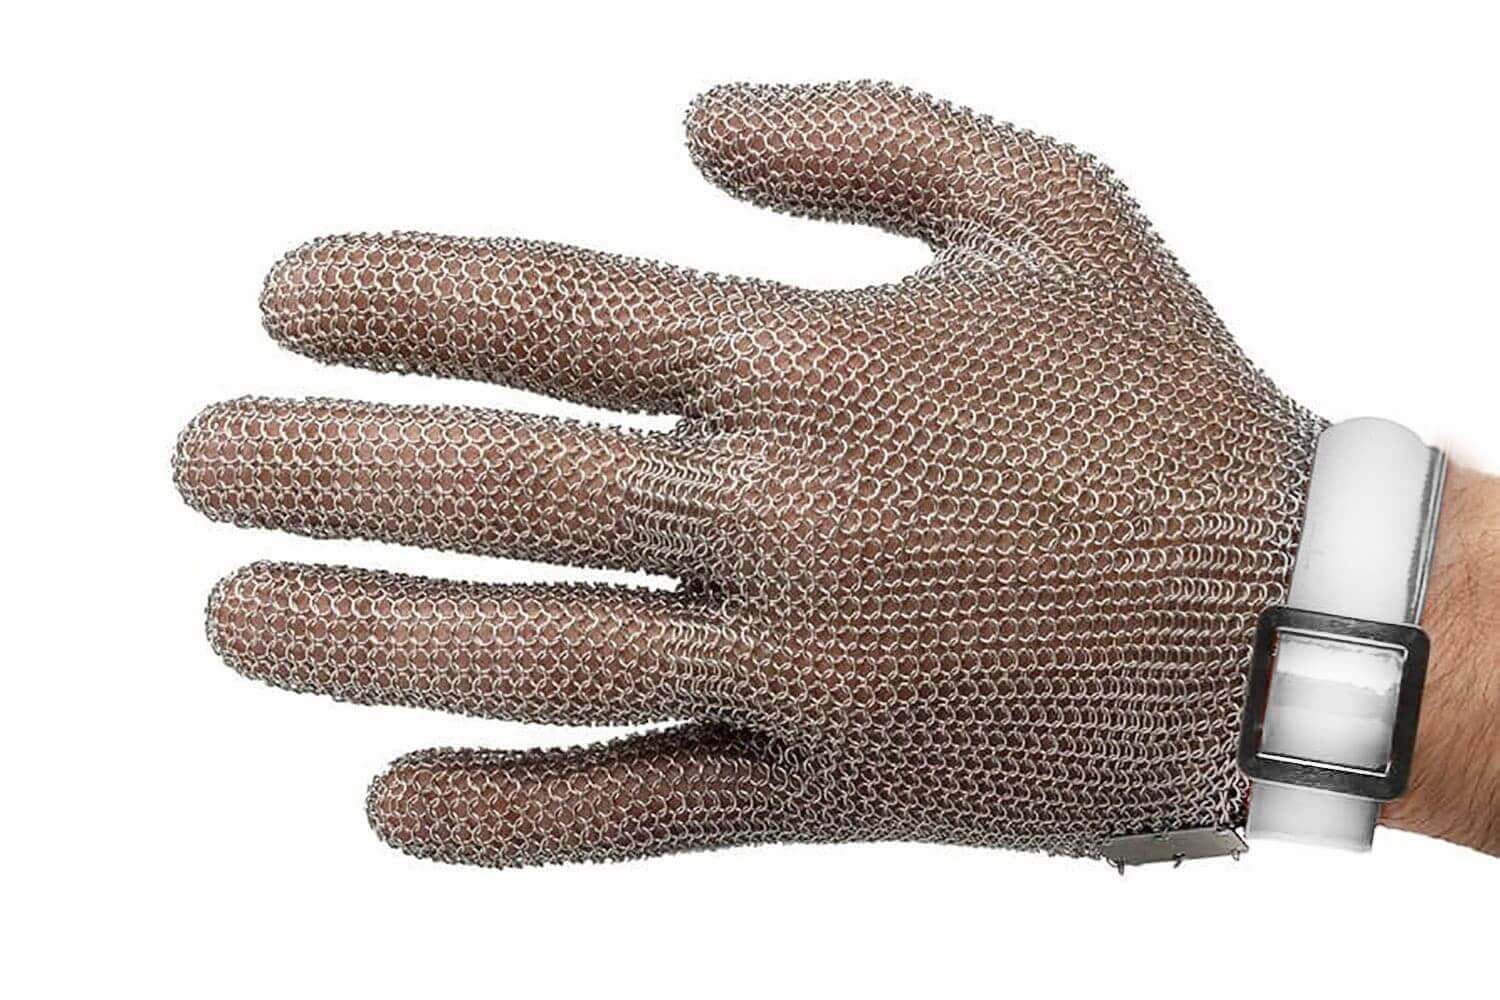 Gant protection anti-coupure boucher Niroflex - Taille 7